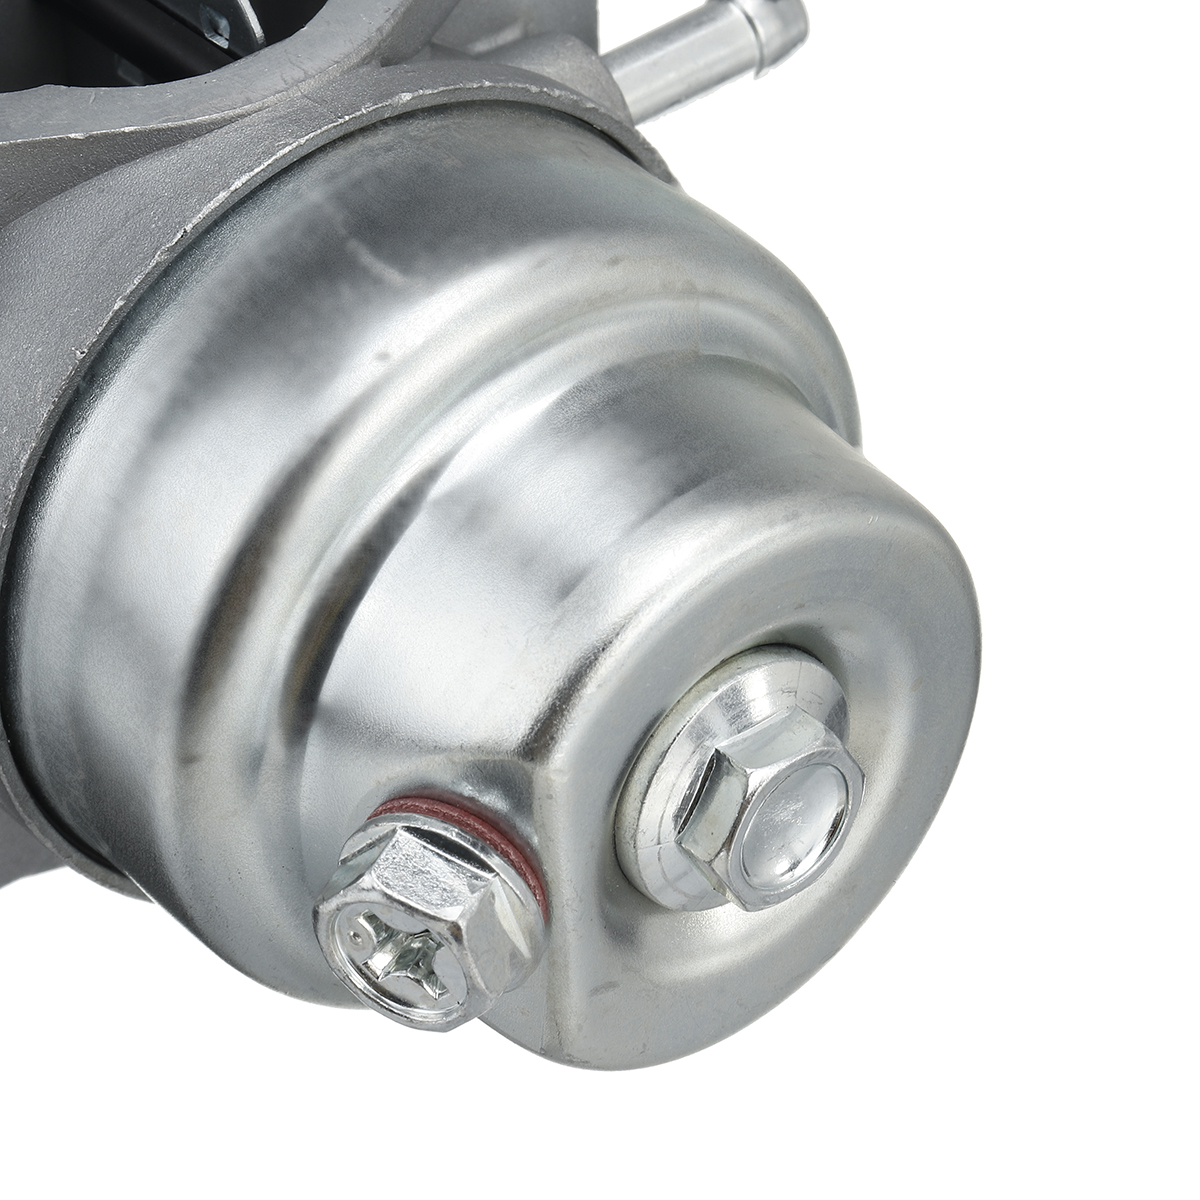 Carburetor-Intake-Kit-Air-Filter-Gaskets-with-Fuel-Line-for-Honda-GCV160-GCV135-Mower-Engine-HRU19R--1842970-9